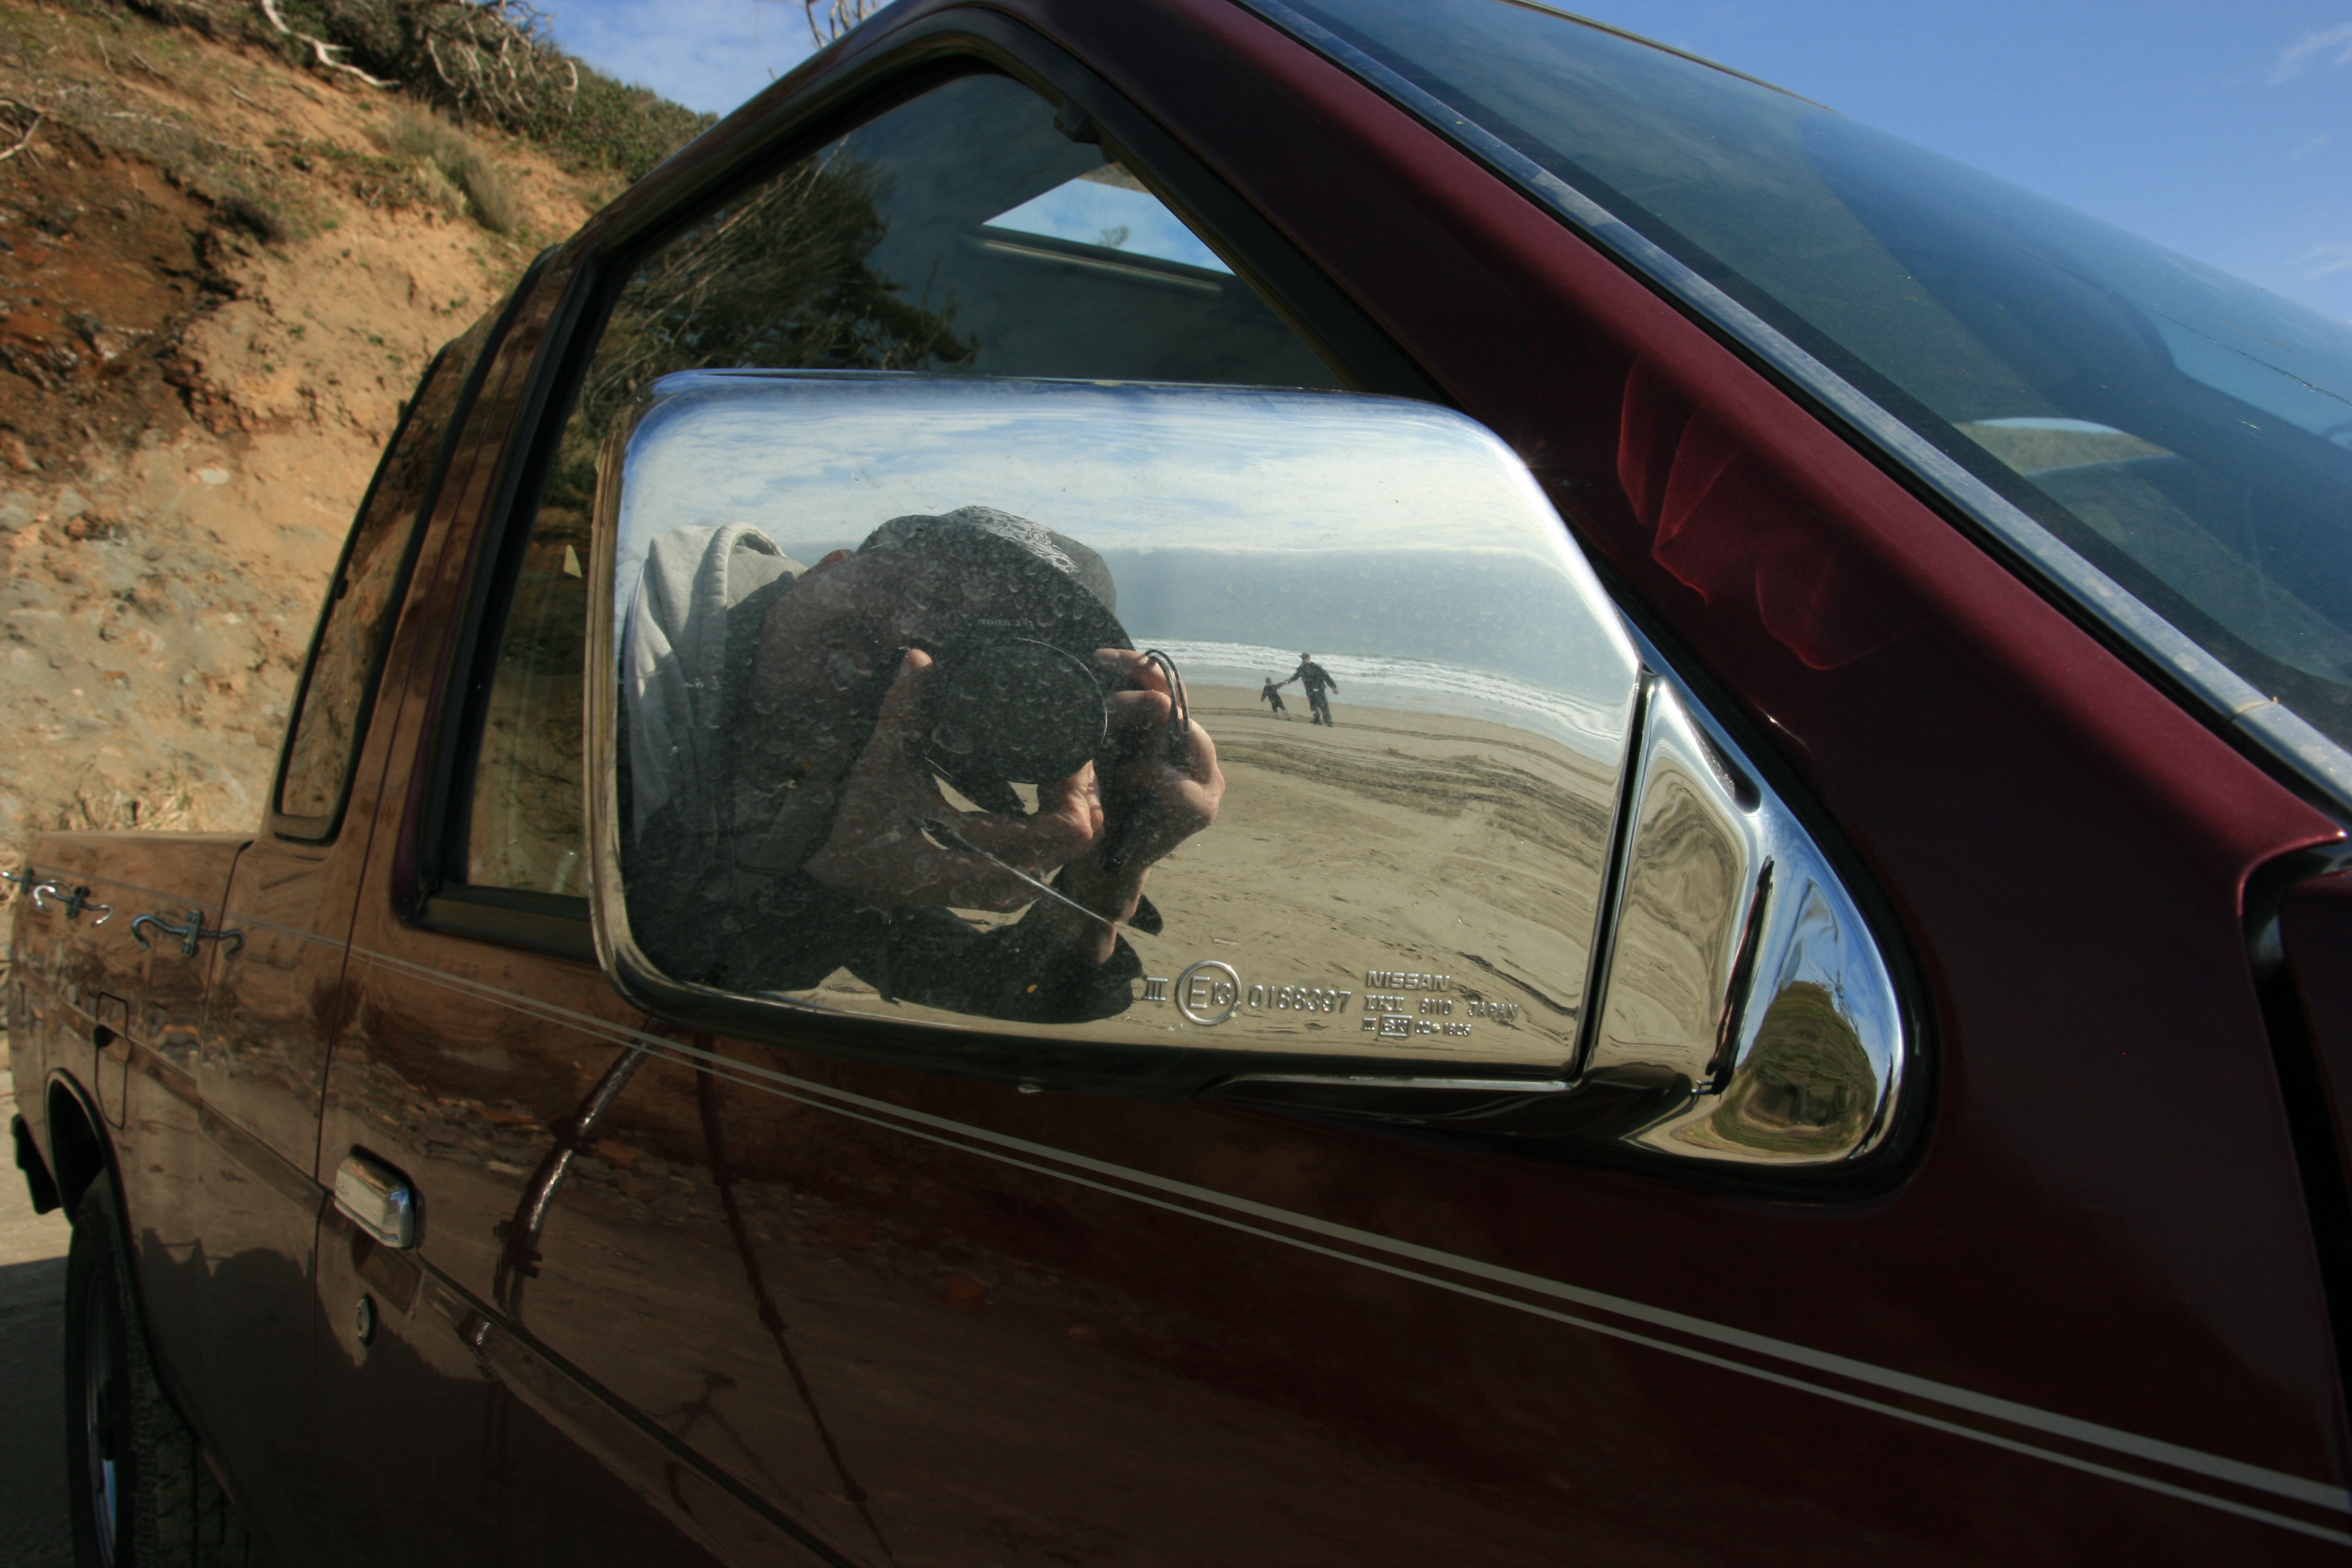 1995 Nissan Hardbody XE side mirror, me | Flickr - Photo Sharing!